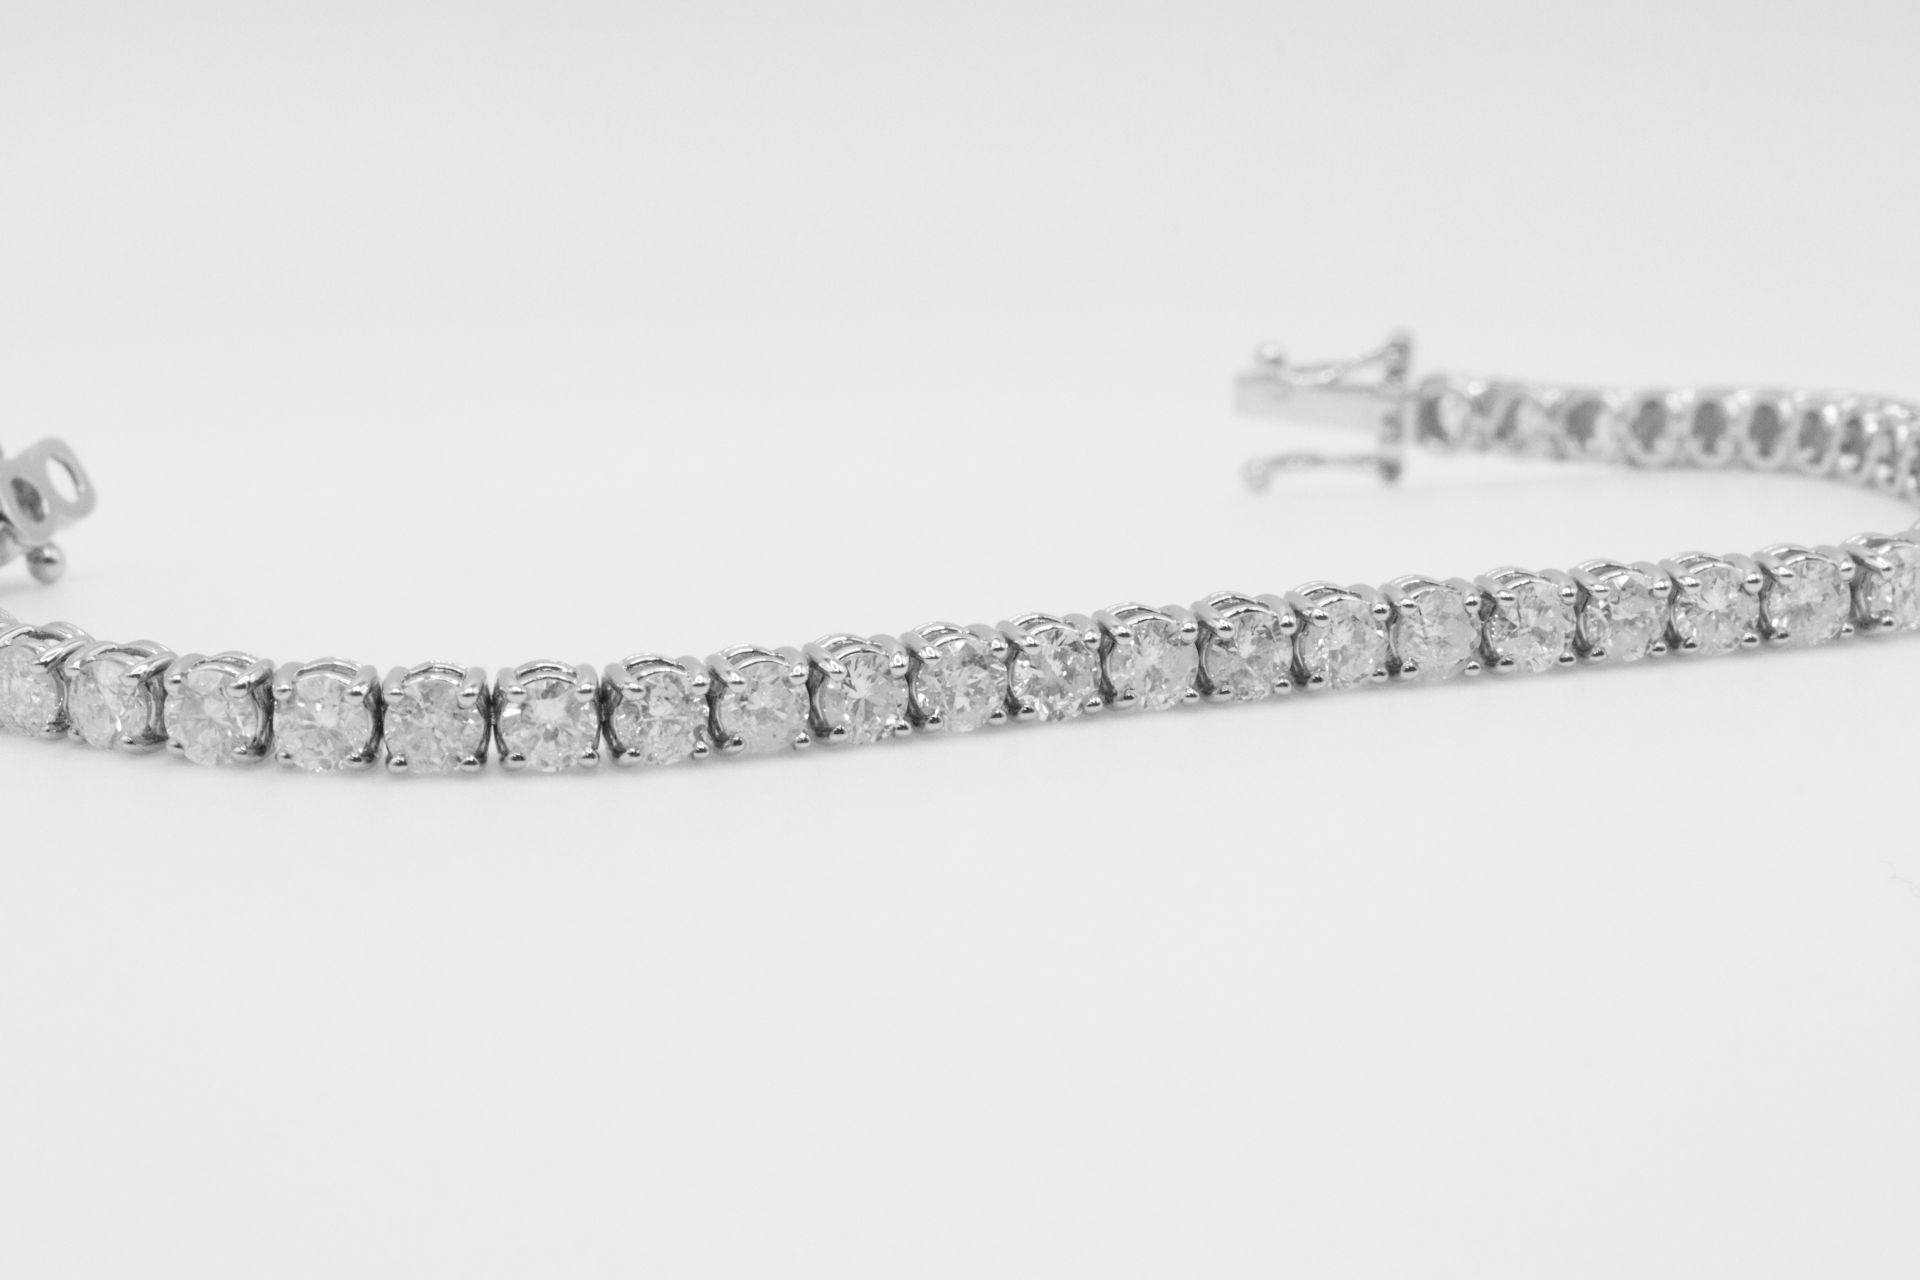 9.0 Carat 18ct White Gold Tennis Bracelet set with Round Brilliant Cut Natural Diamonds - Image 15 of 17